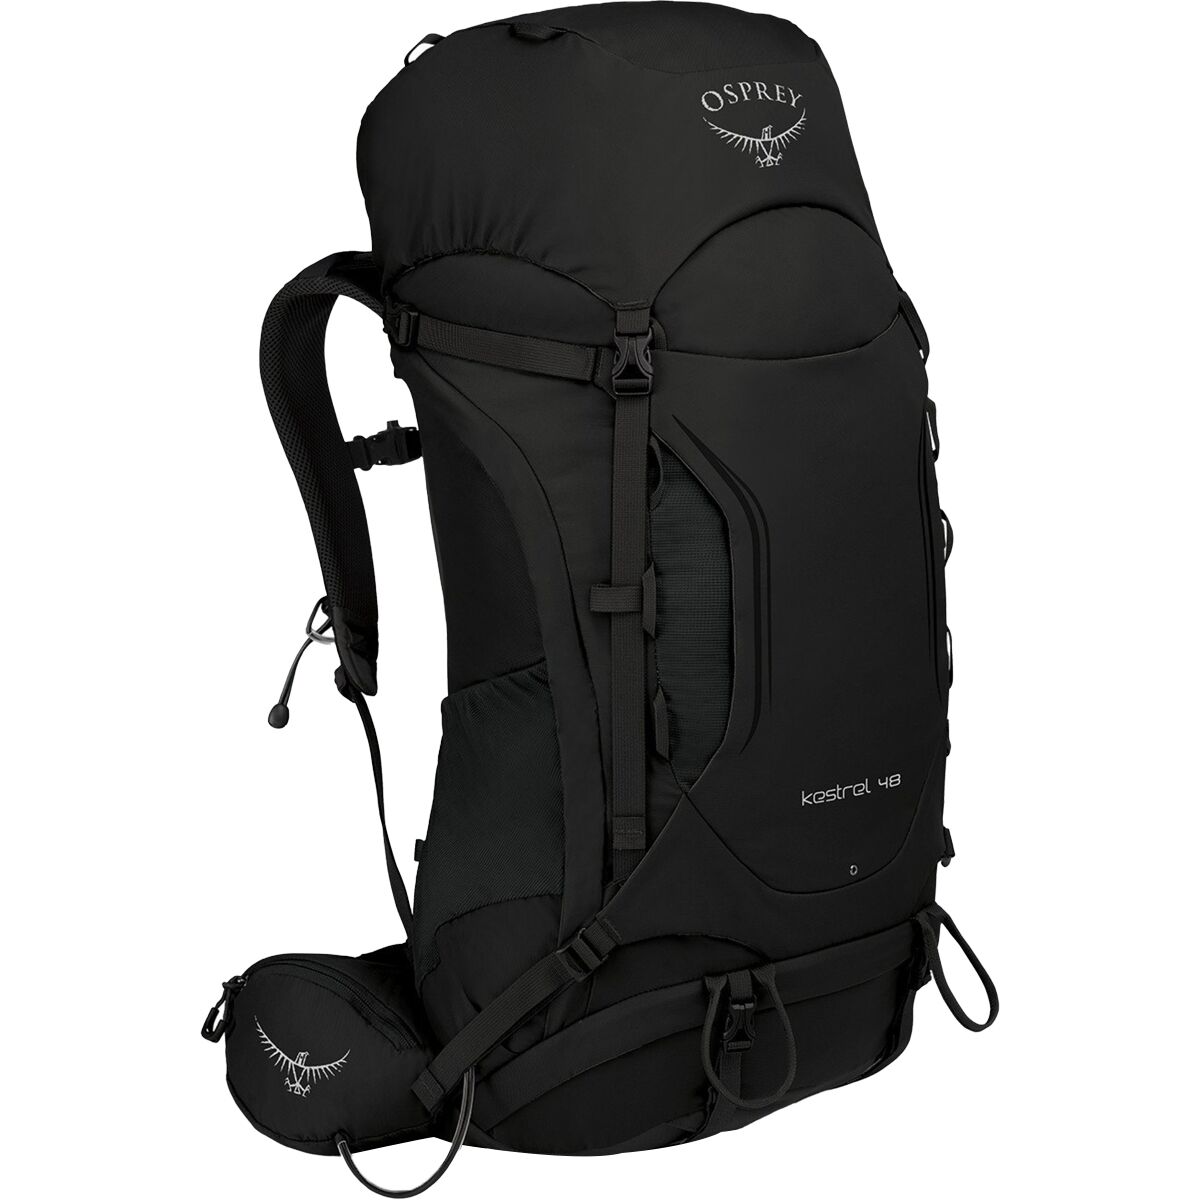 Osprey Packs Kestrel 48L Backpack